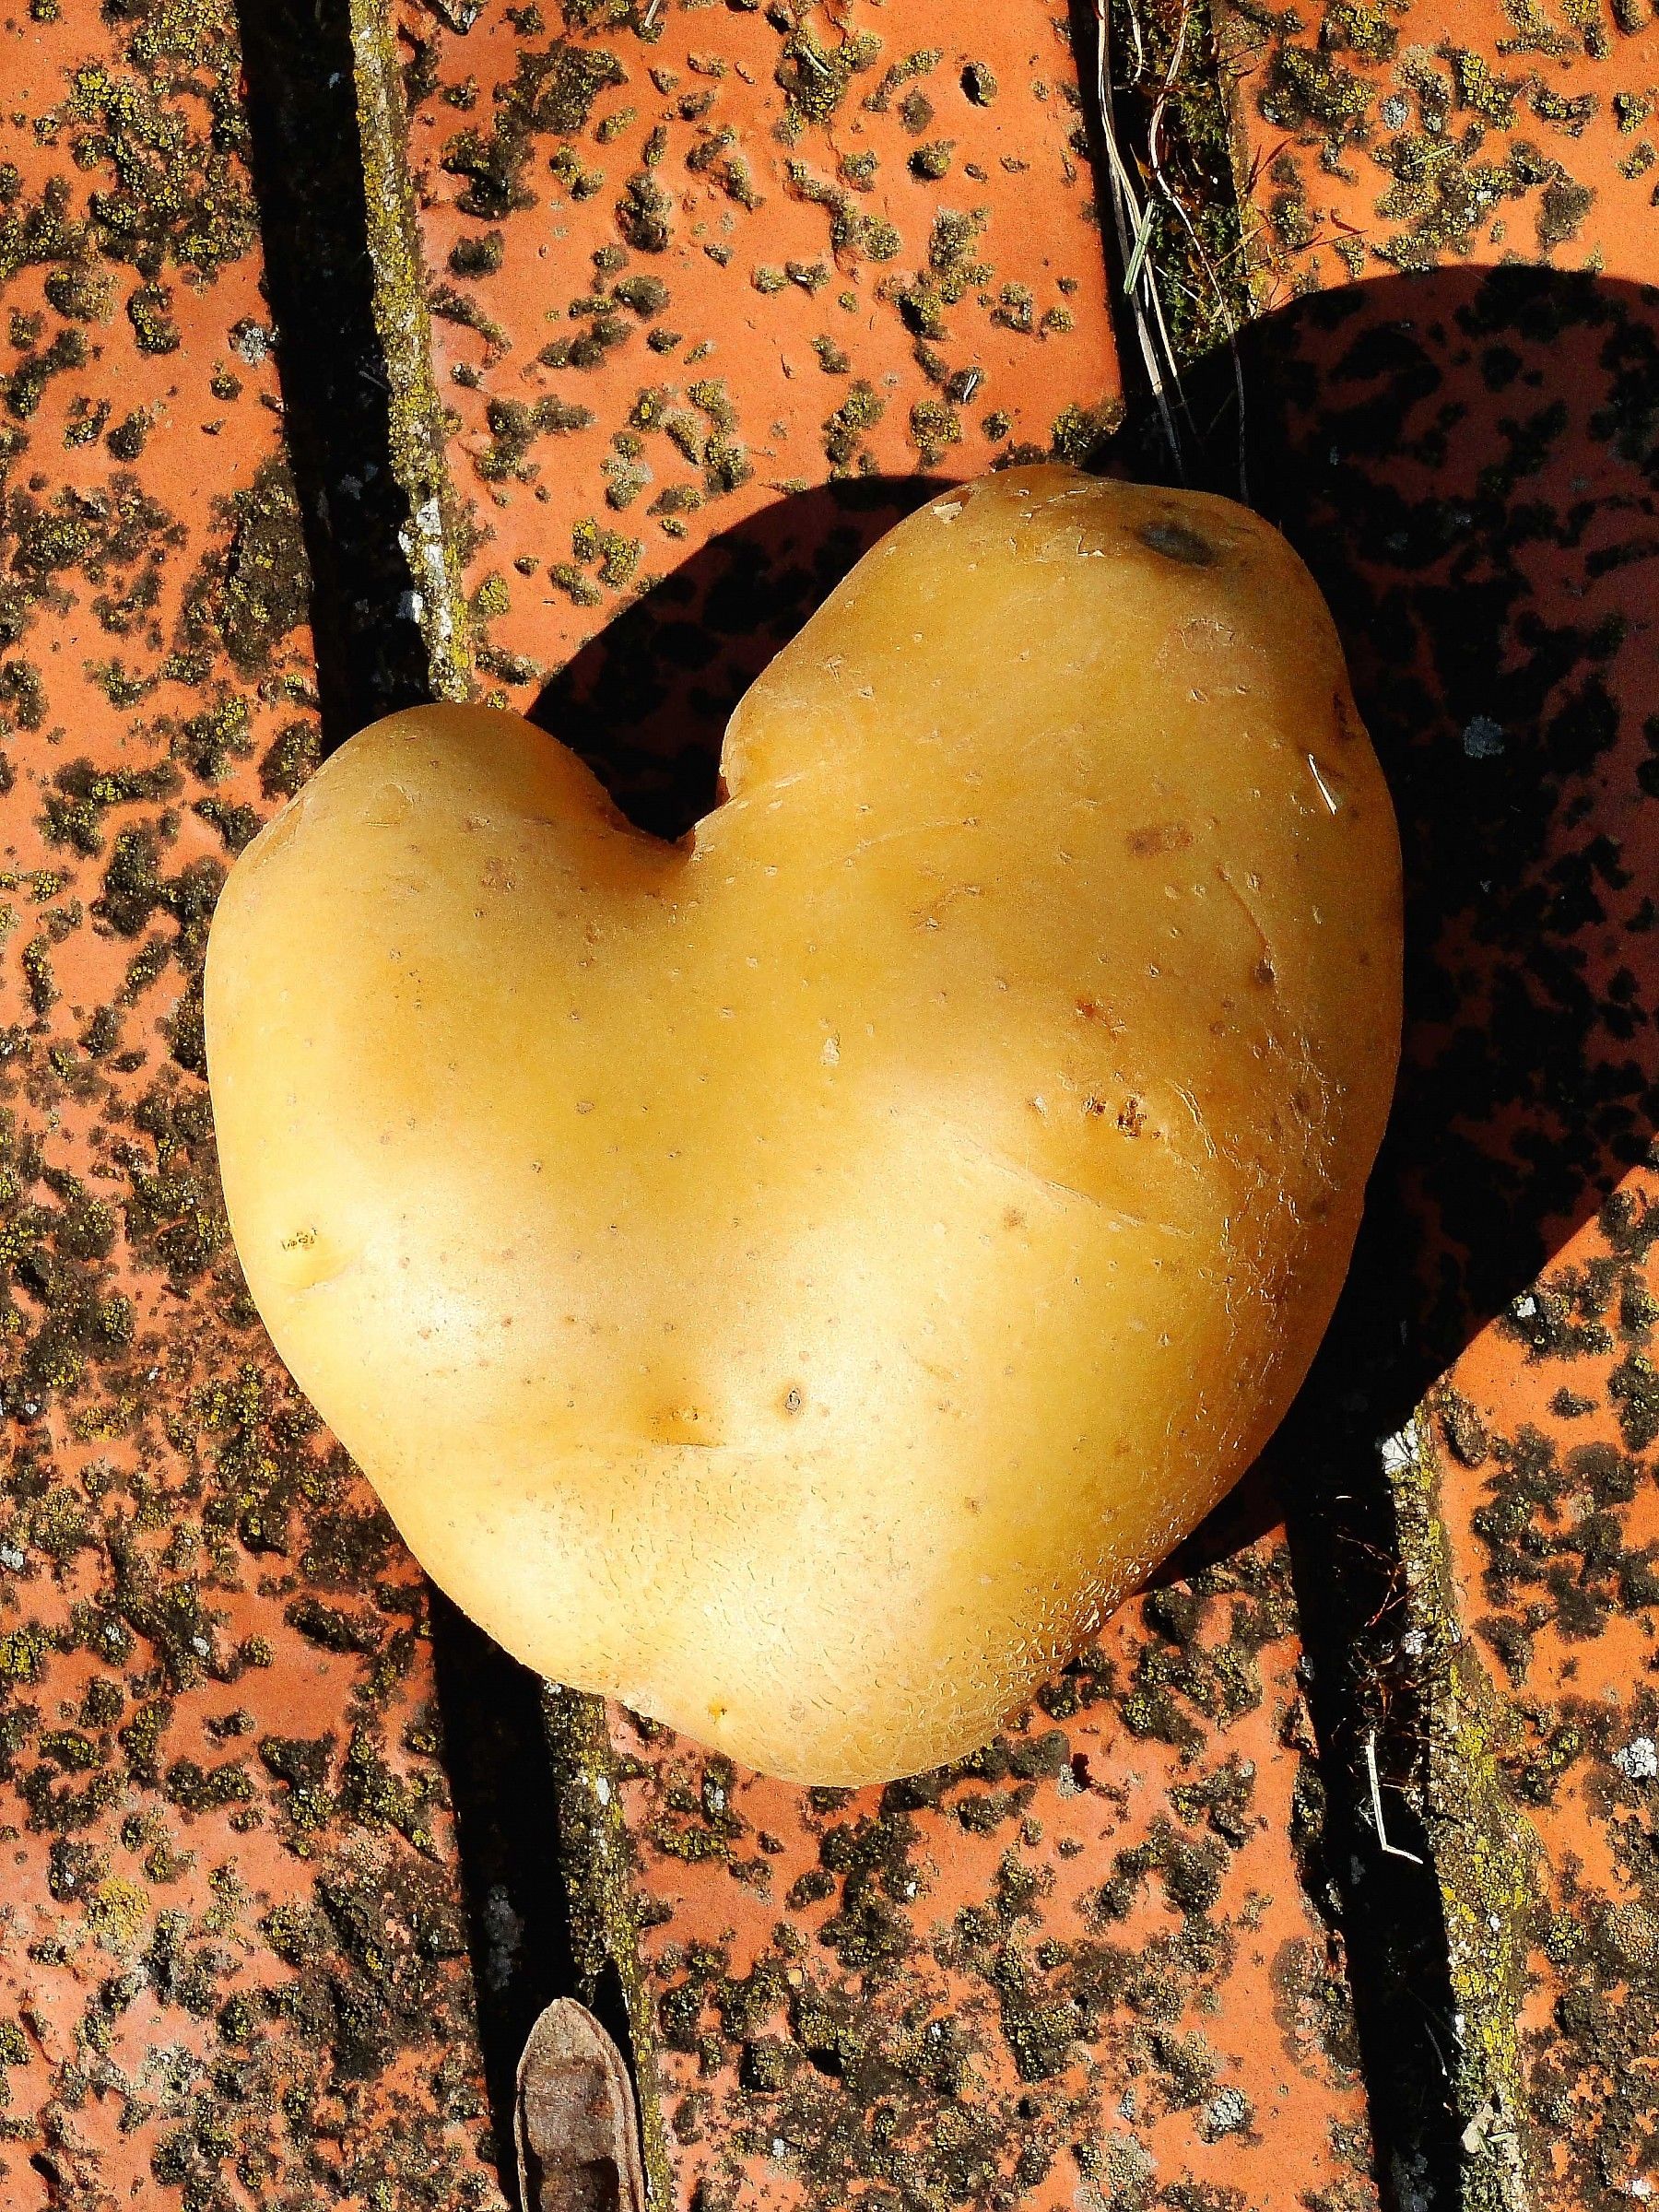 Heart of potato....